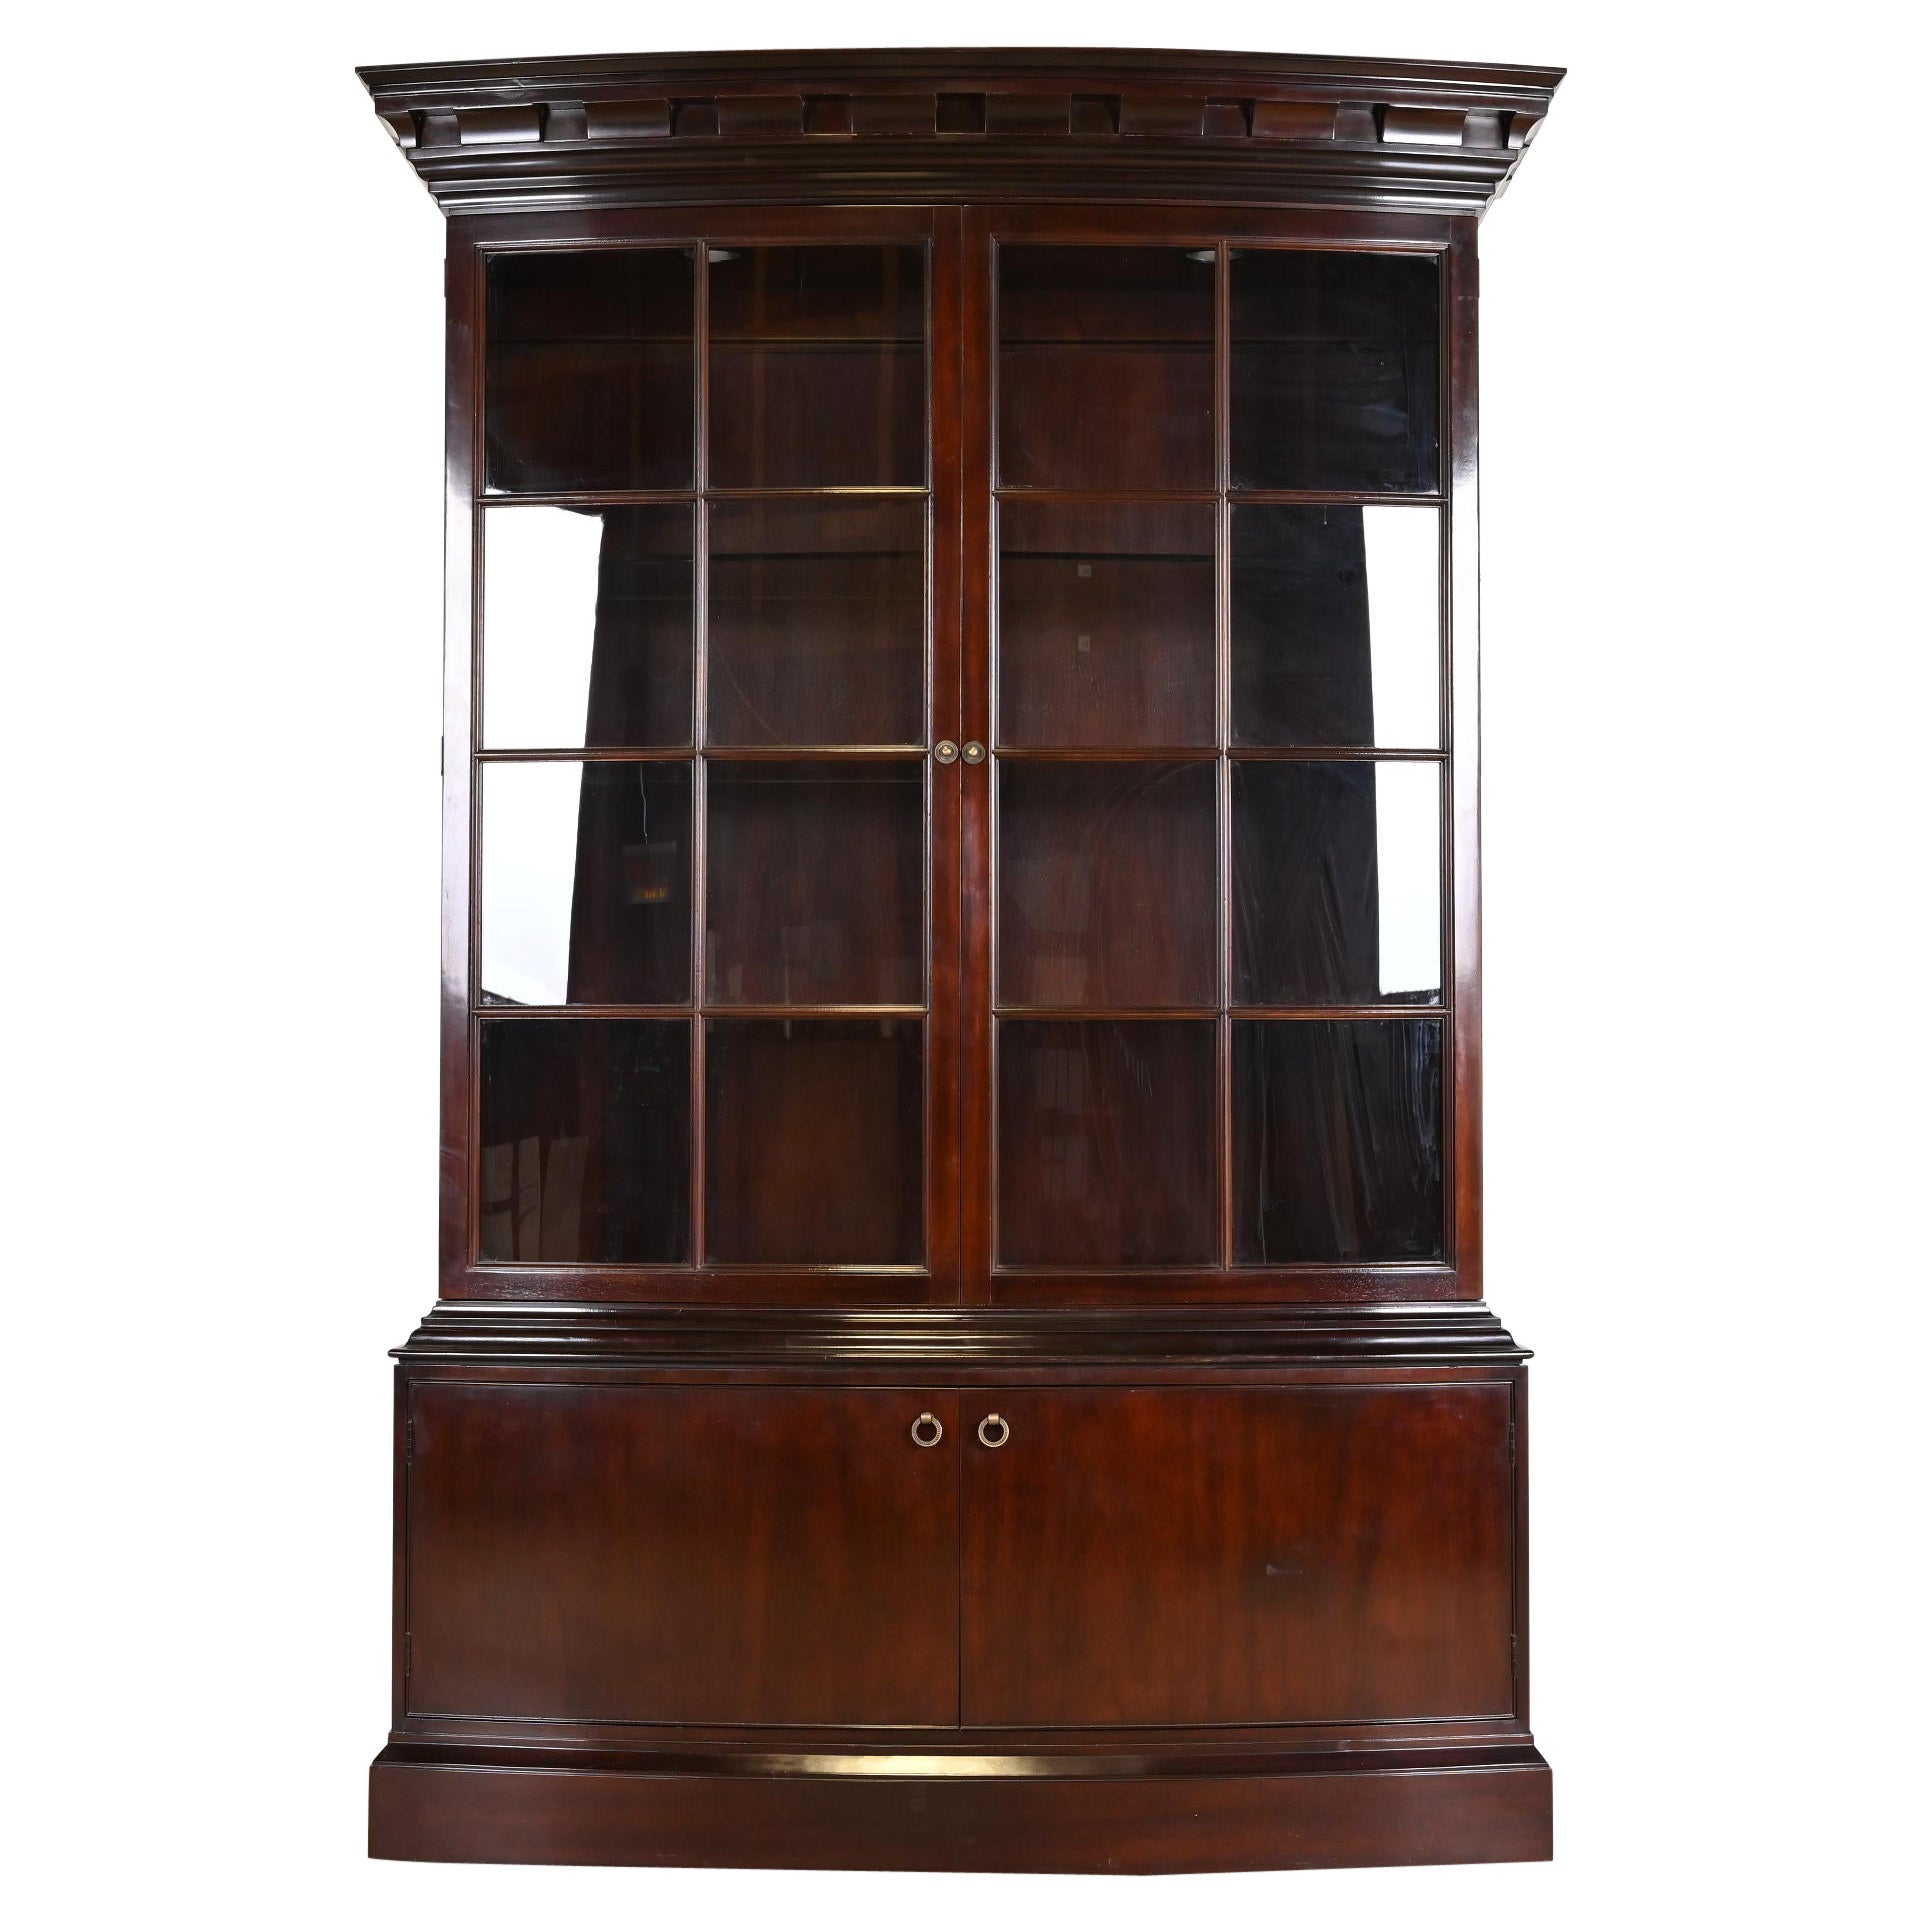 Baker Furniture Regency Carved Mahogany Lighted Breakfront Bookcase Cabinet